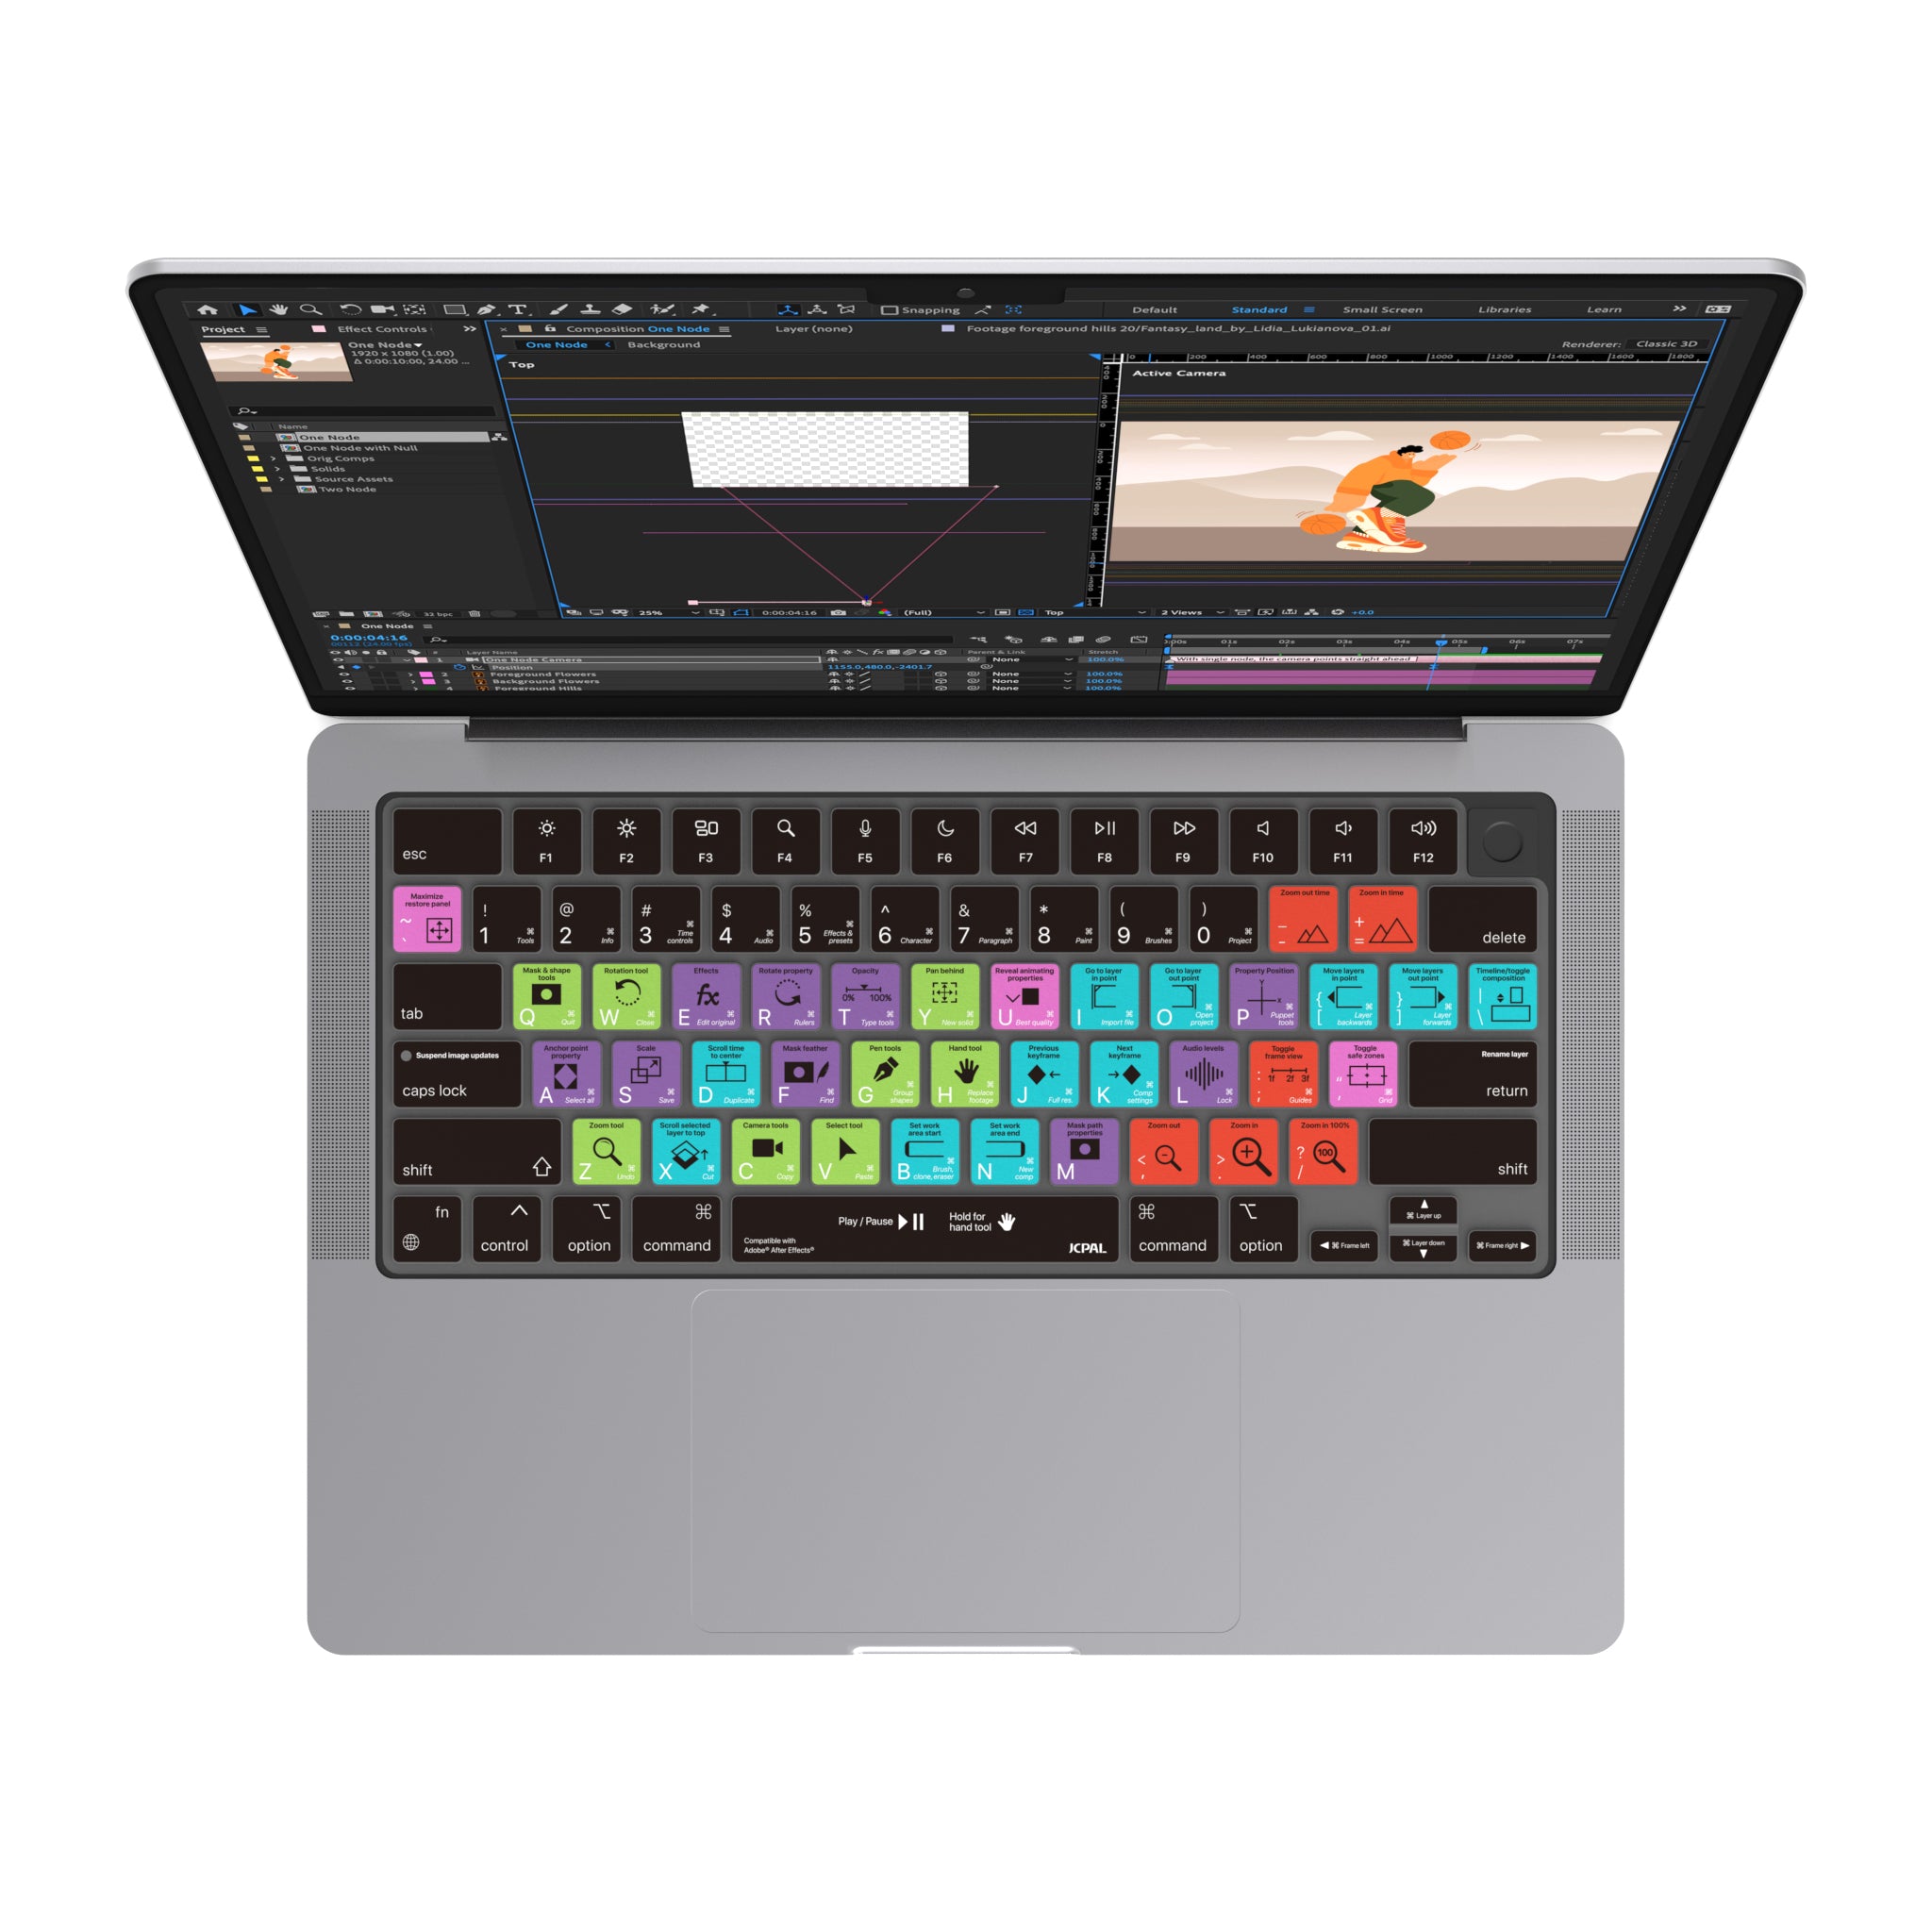 Protecteur de clavier de raccourci VerSkin Adobe After Effects